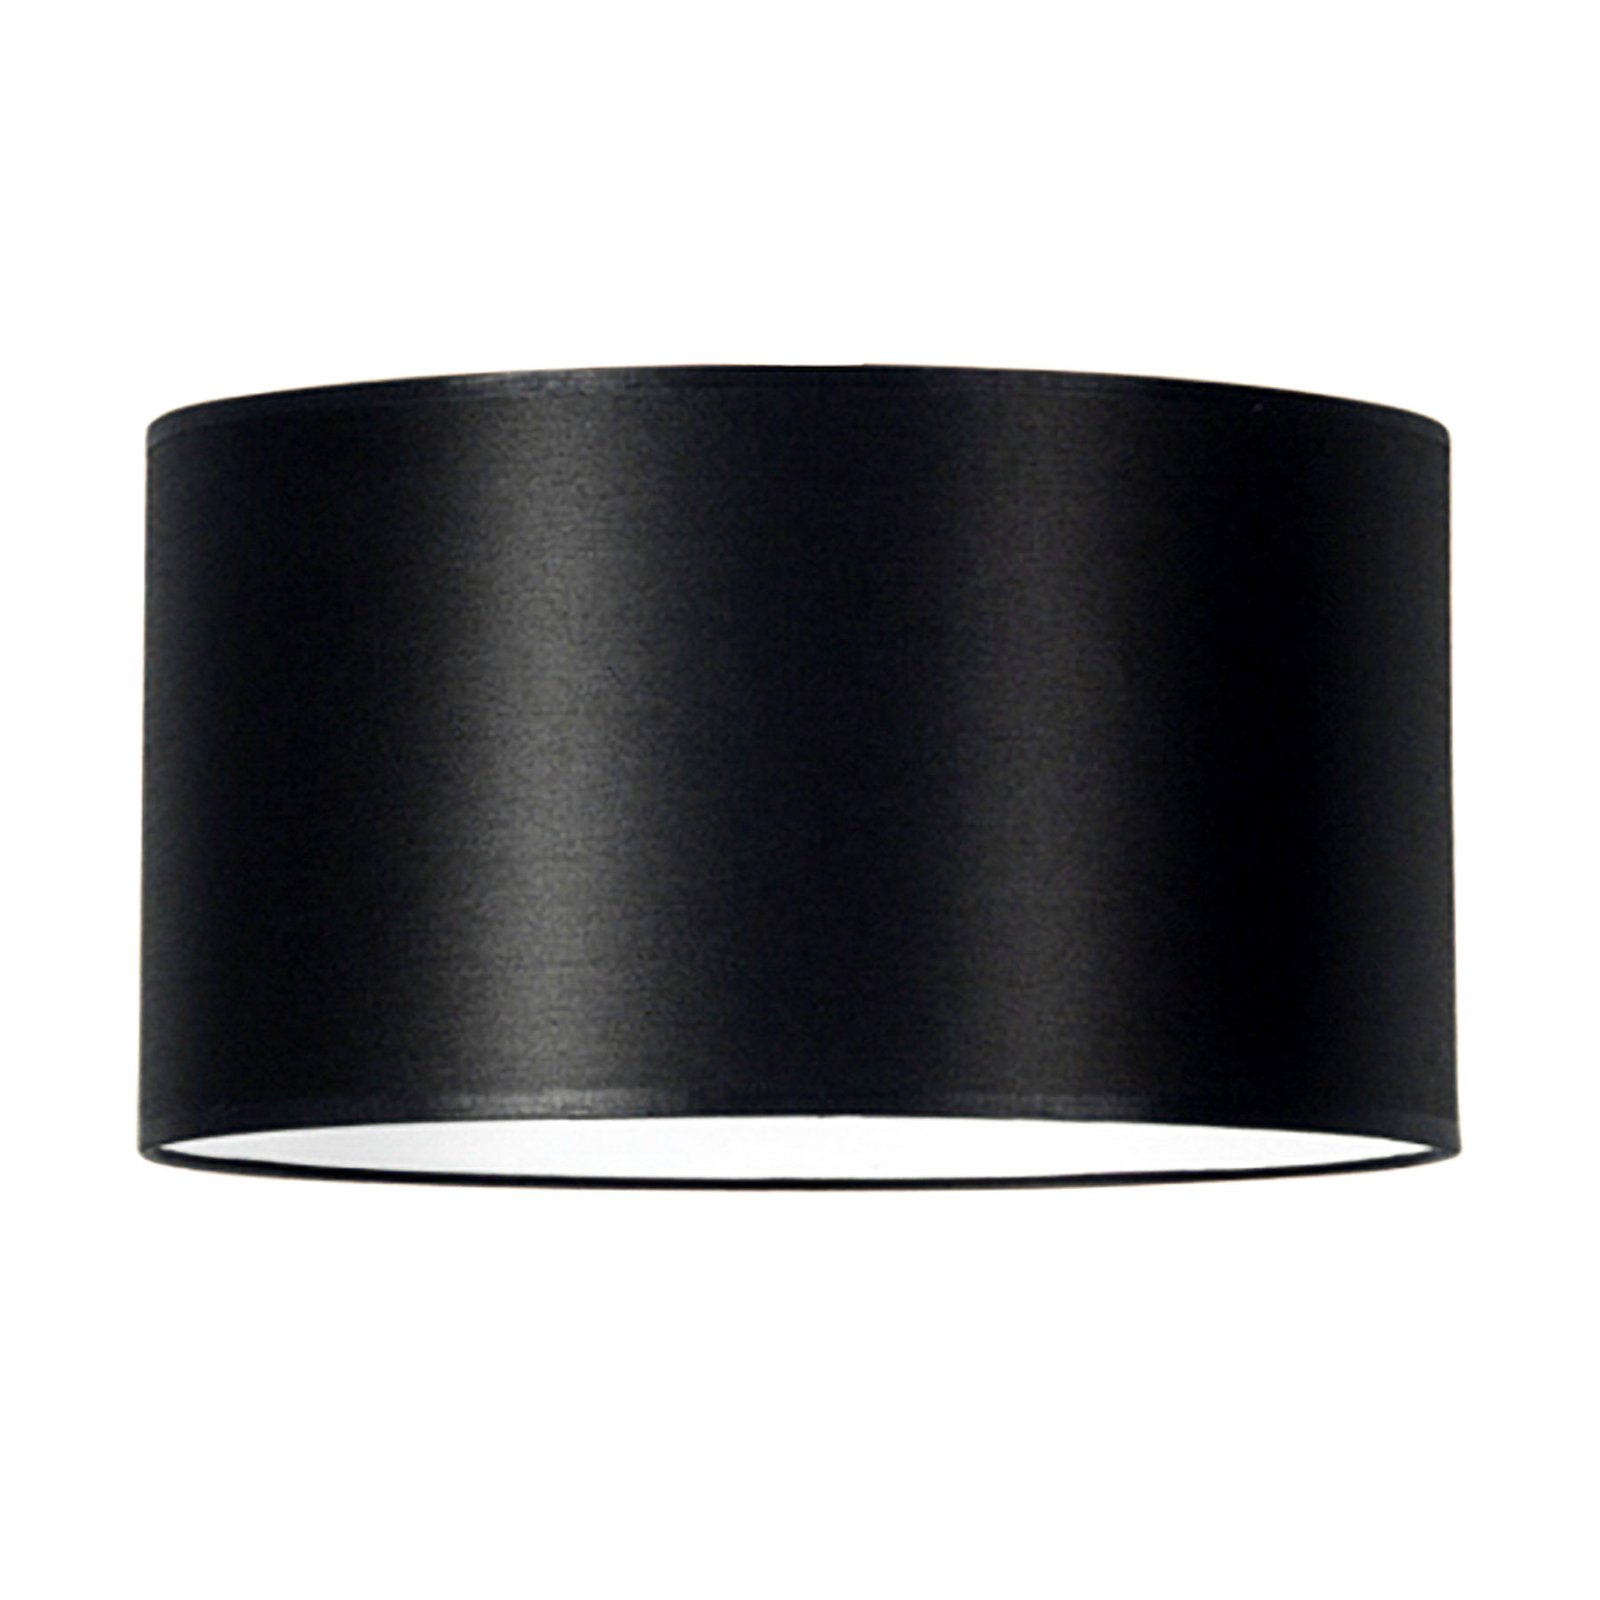 Corralee lampshade, Ø 50 cm, 25 cm high, black